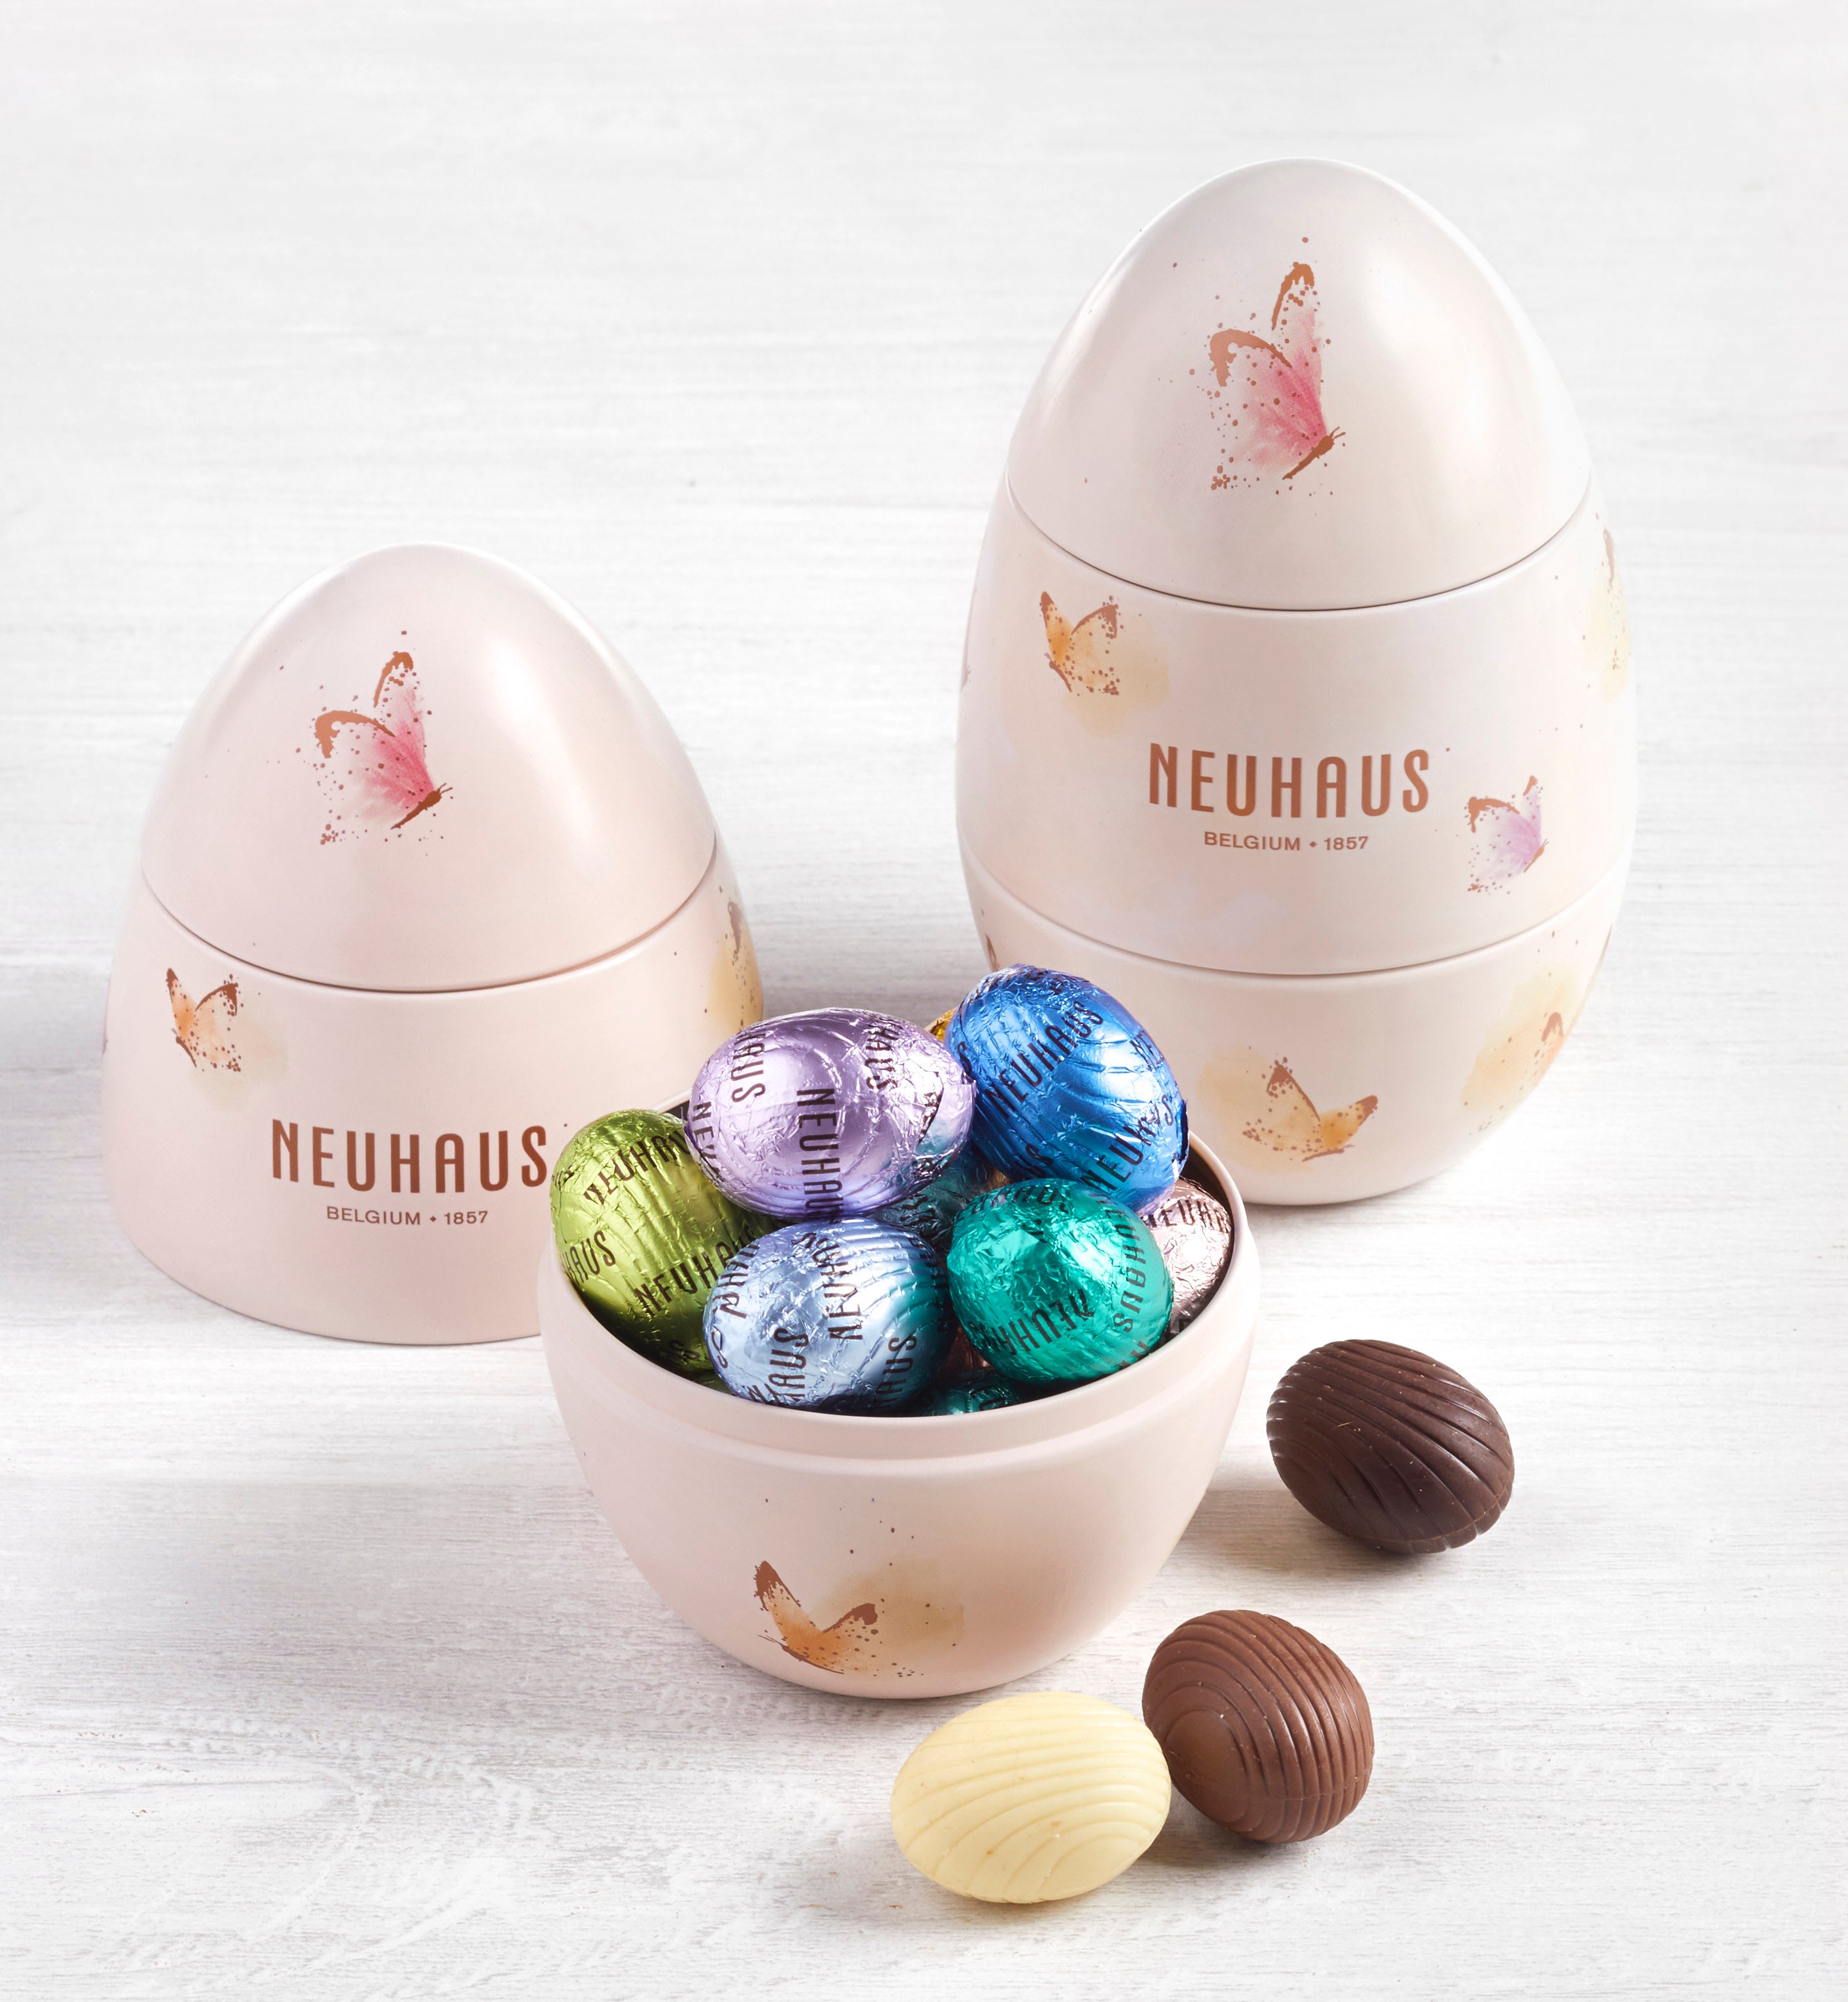 Neuhaus Easter Egg Shaped Tin